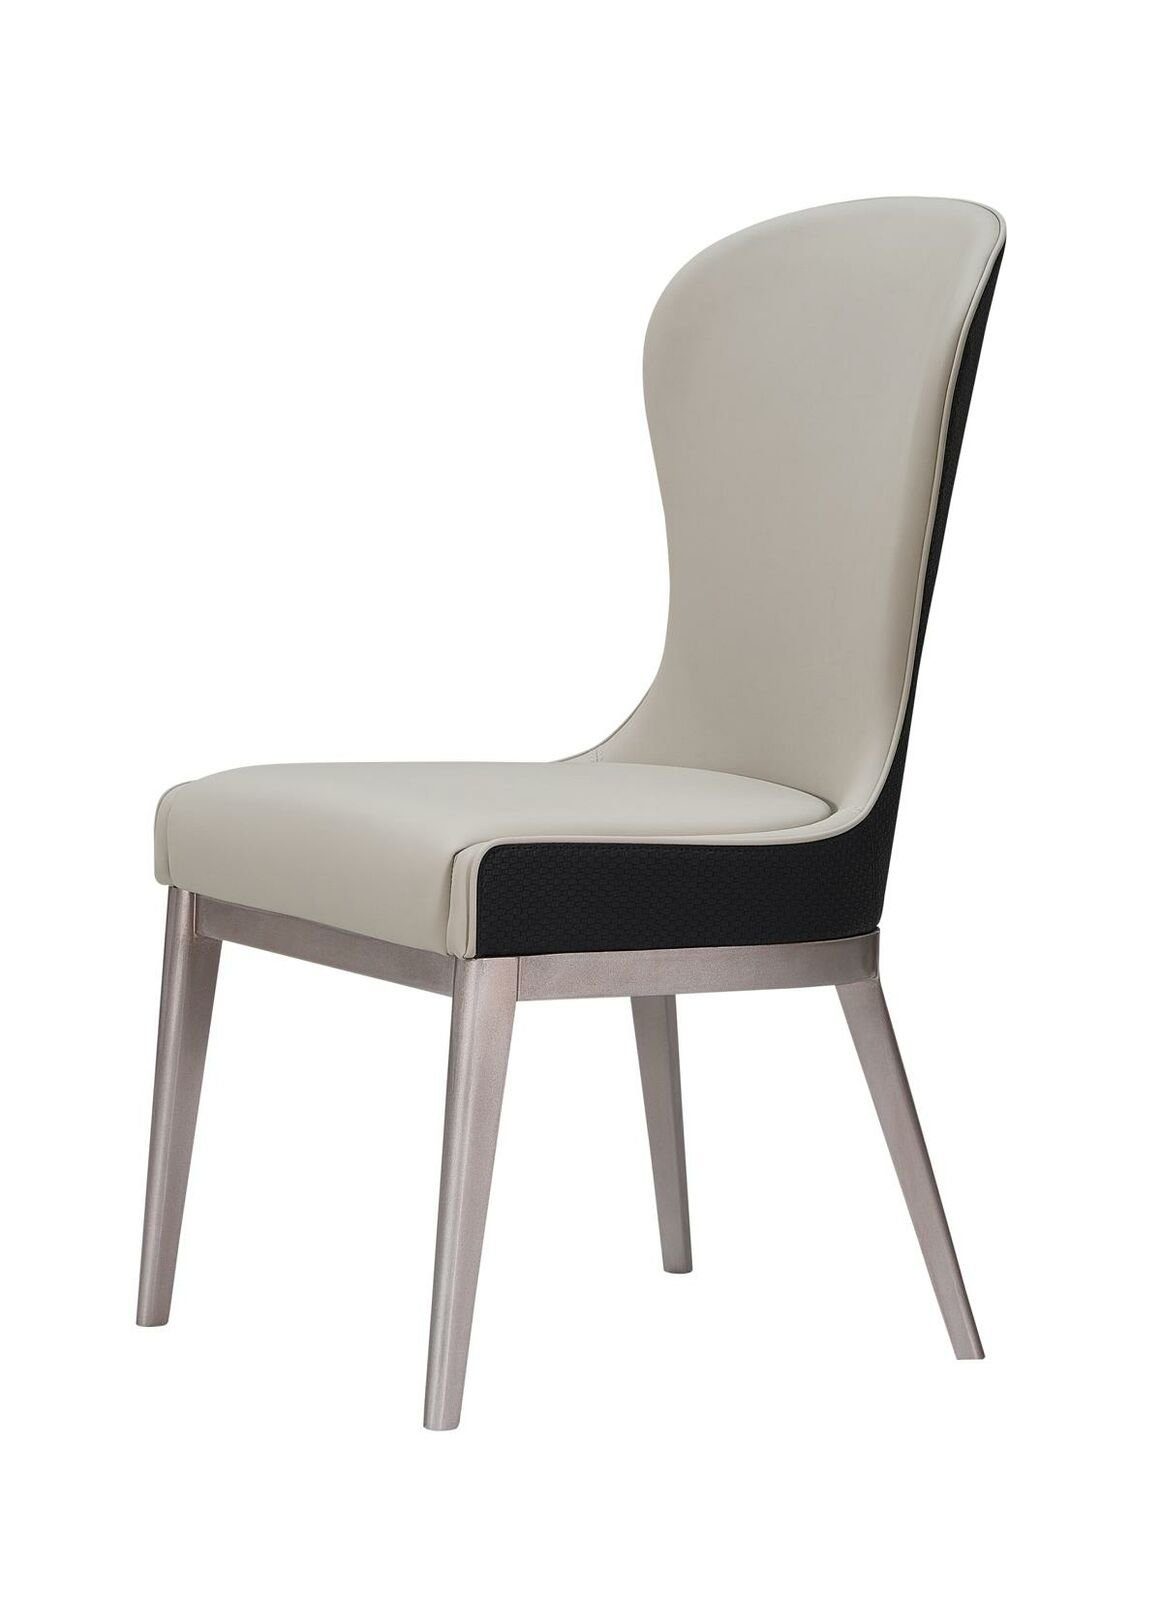 Über 80% Rabatt JVmoebel Esszimmerstuhl Lederstuhl Stühle Esszimmer Edelstahl Lehnstuhl Luxus Grau Design